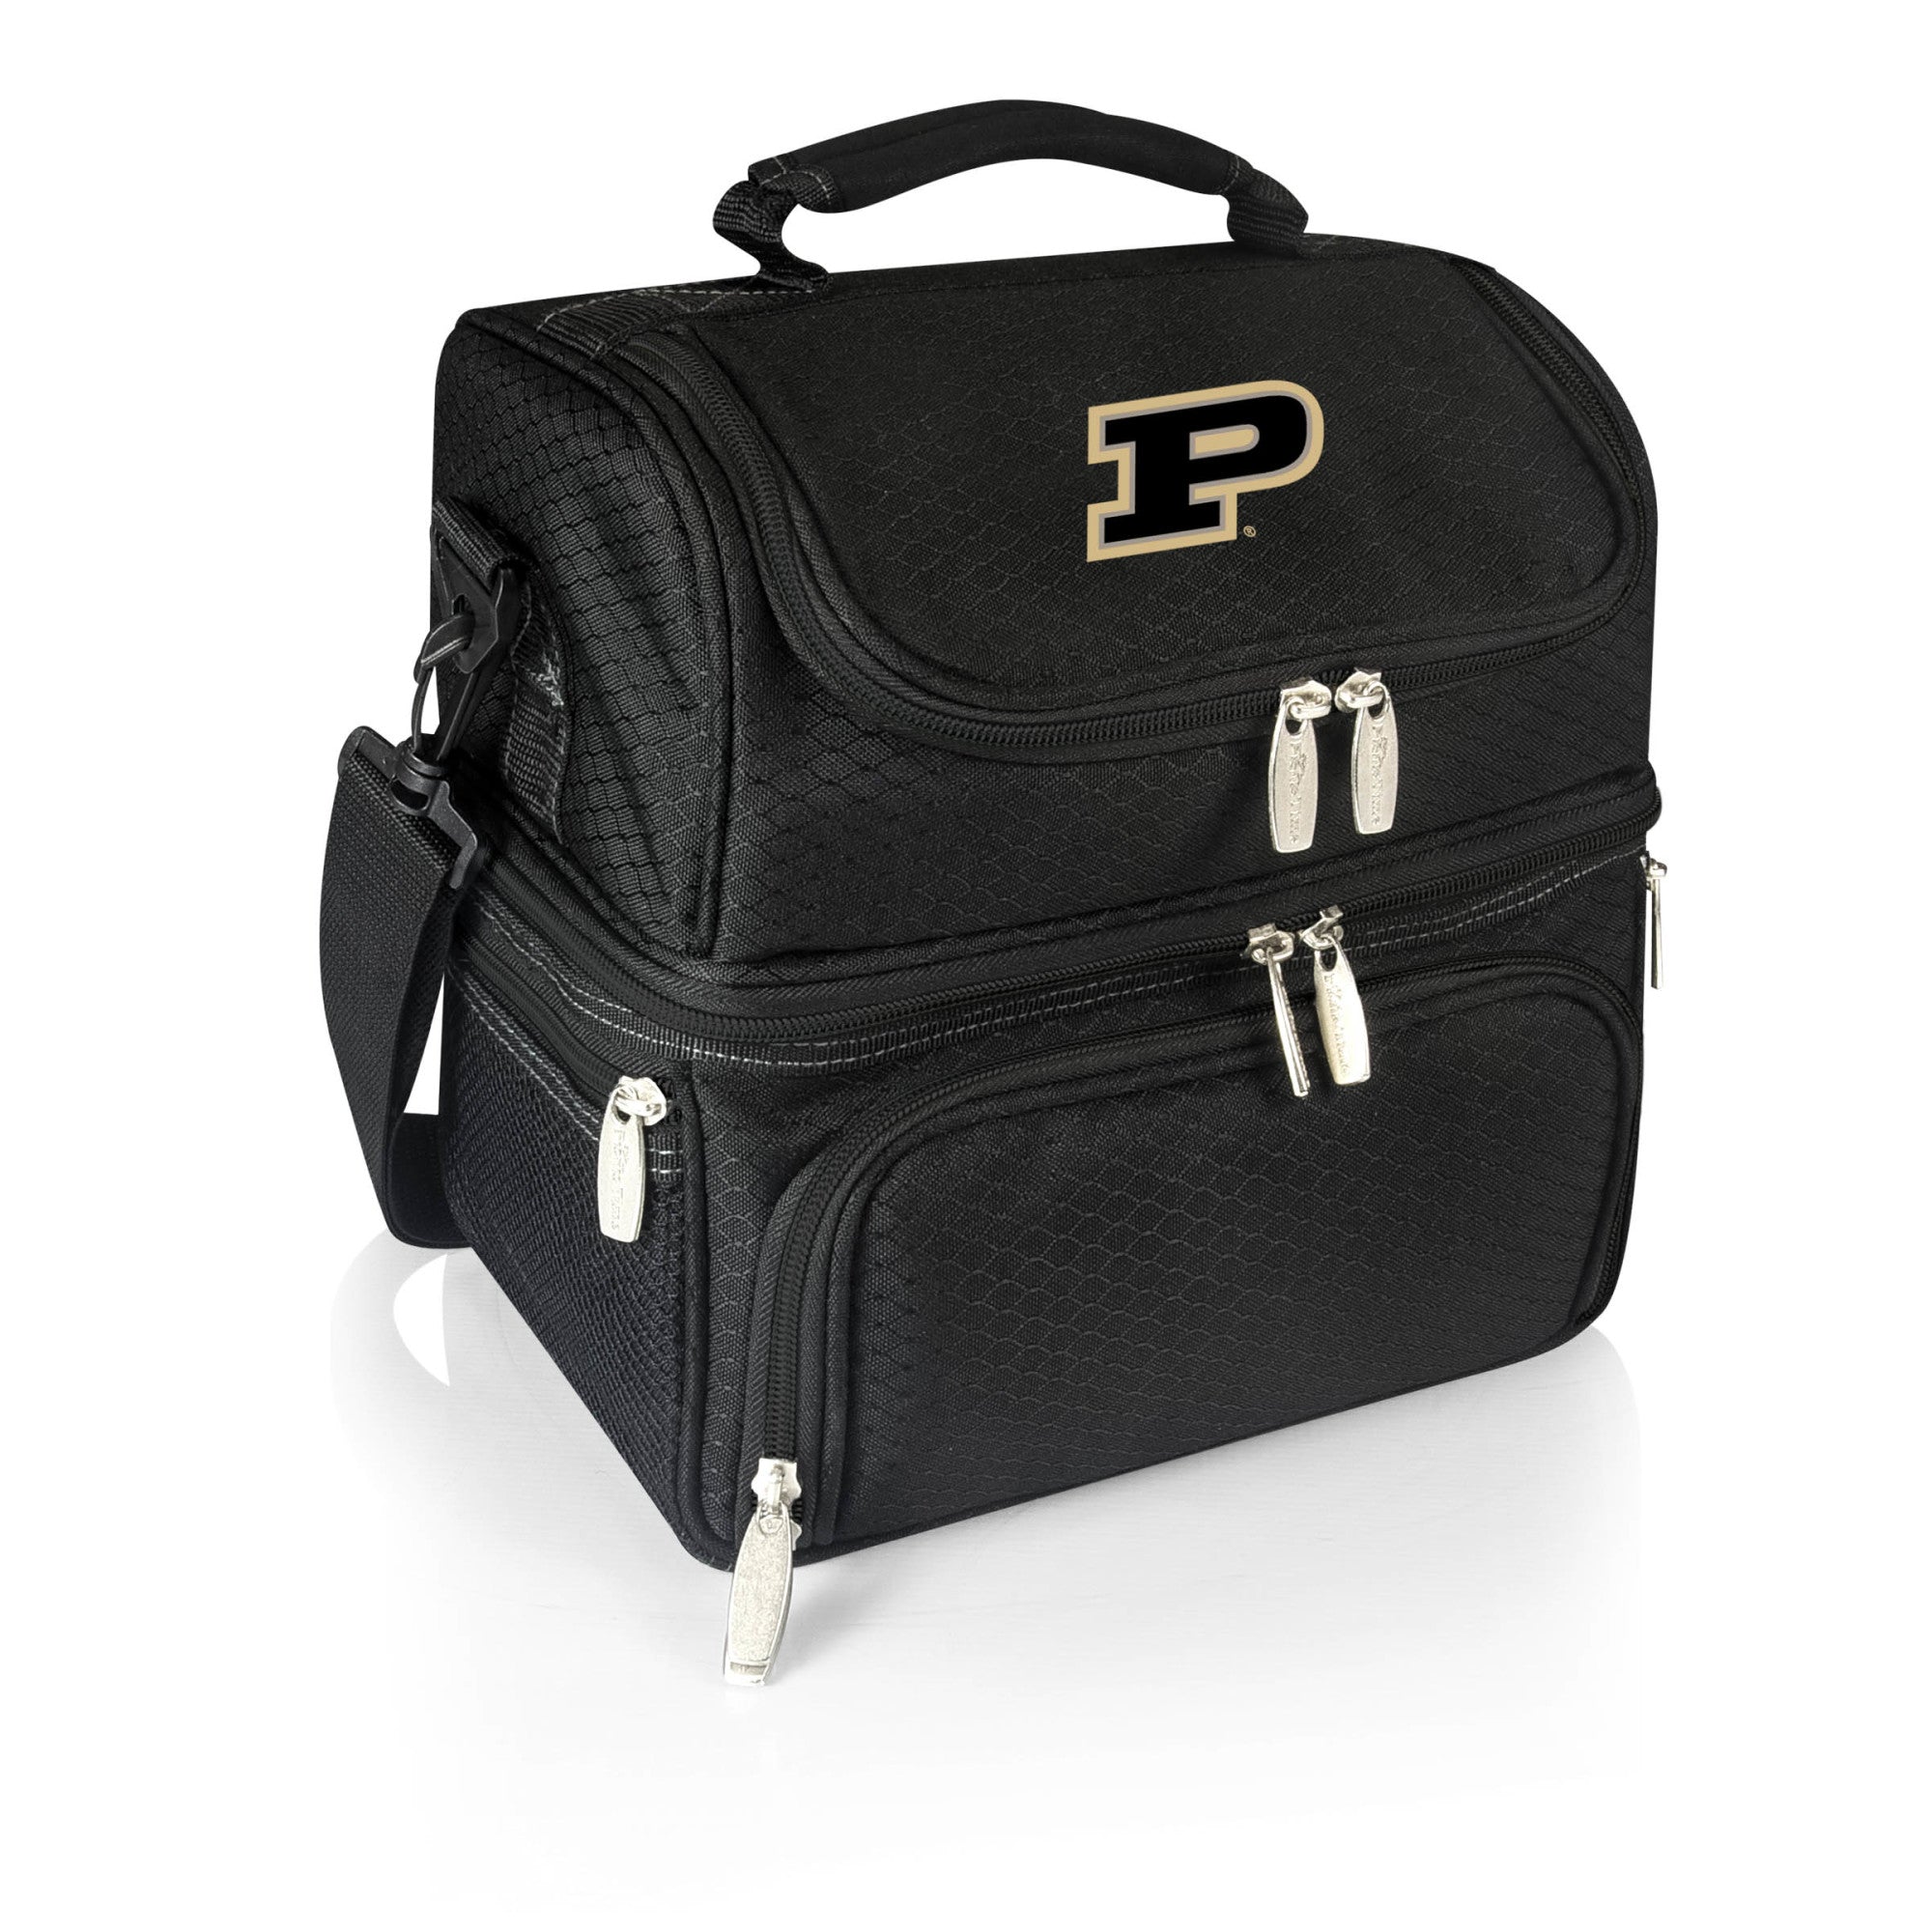 Picnic Time - Purdue boilermakers - pranzo lunch cooler bag, (black)